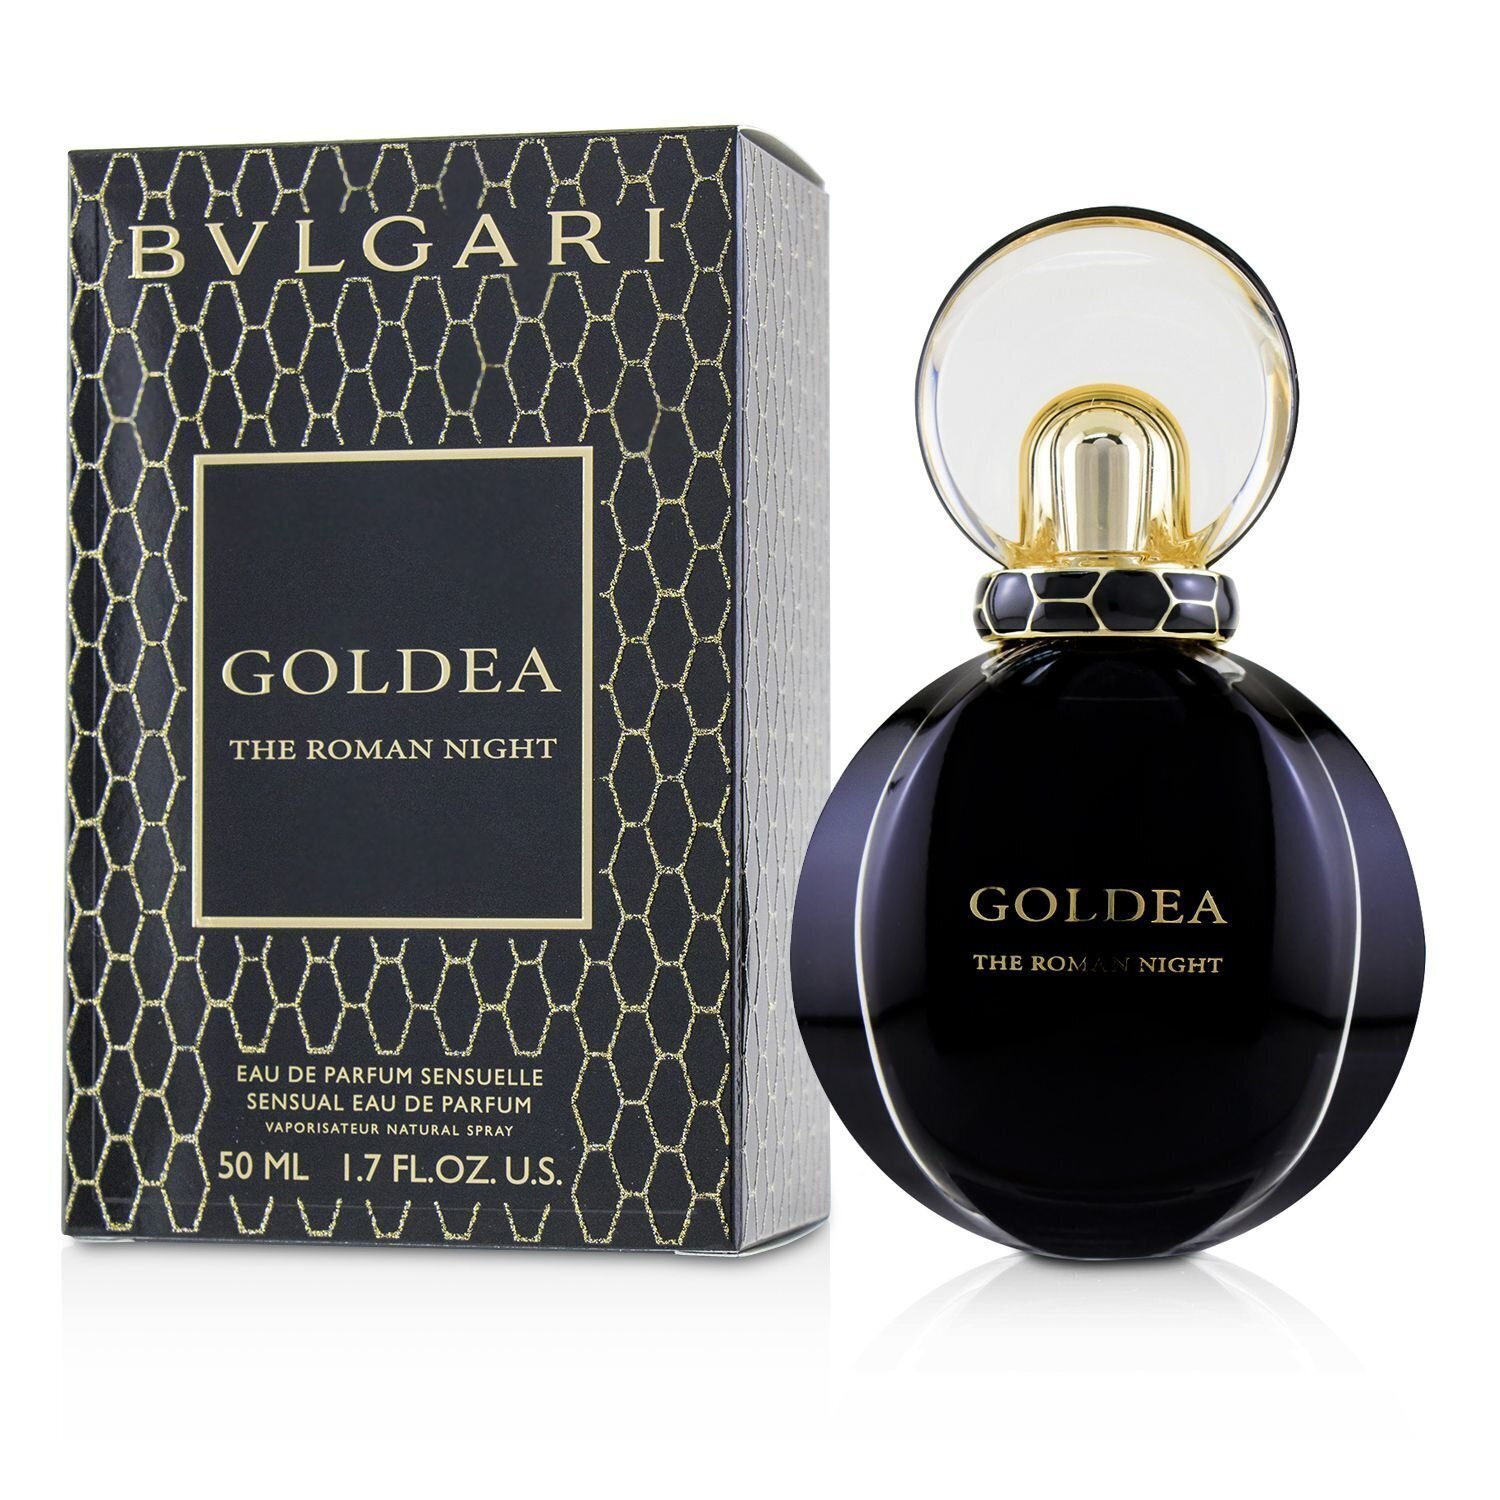 Bvlgari Goldea The Roman Night Eau De Parfum Spray 50ml/1.7oz